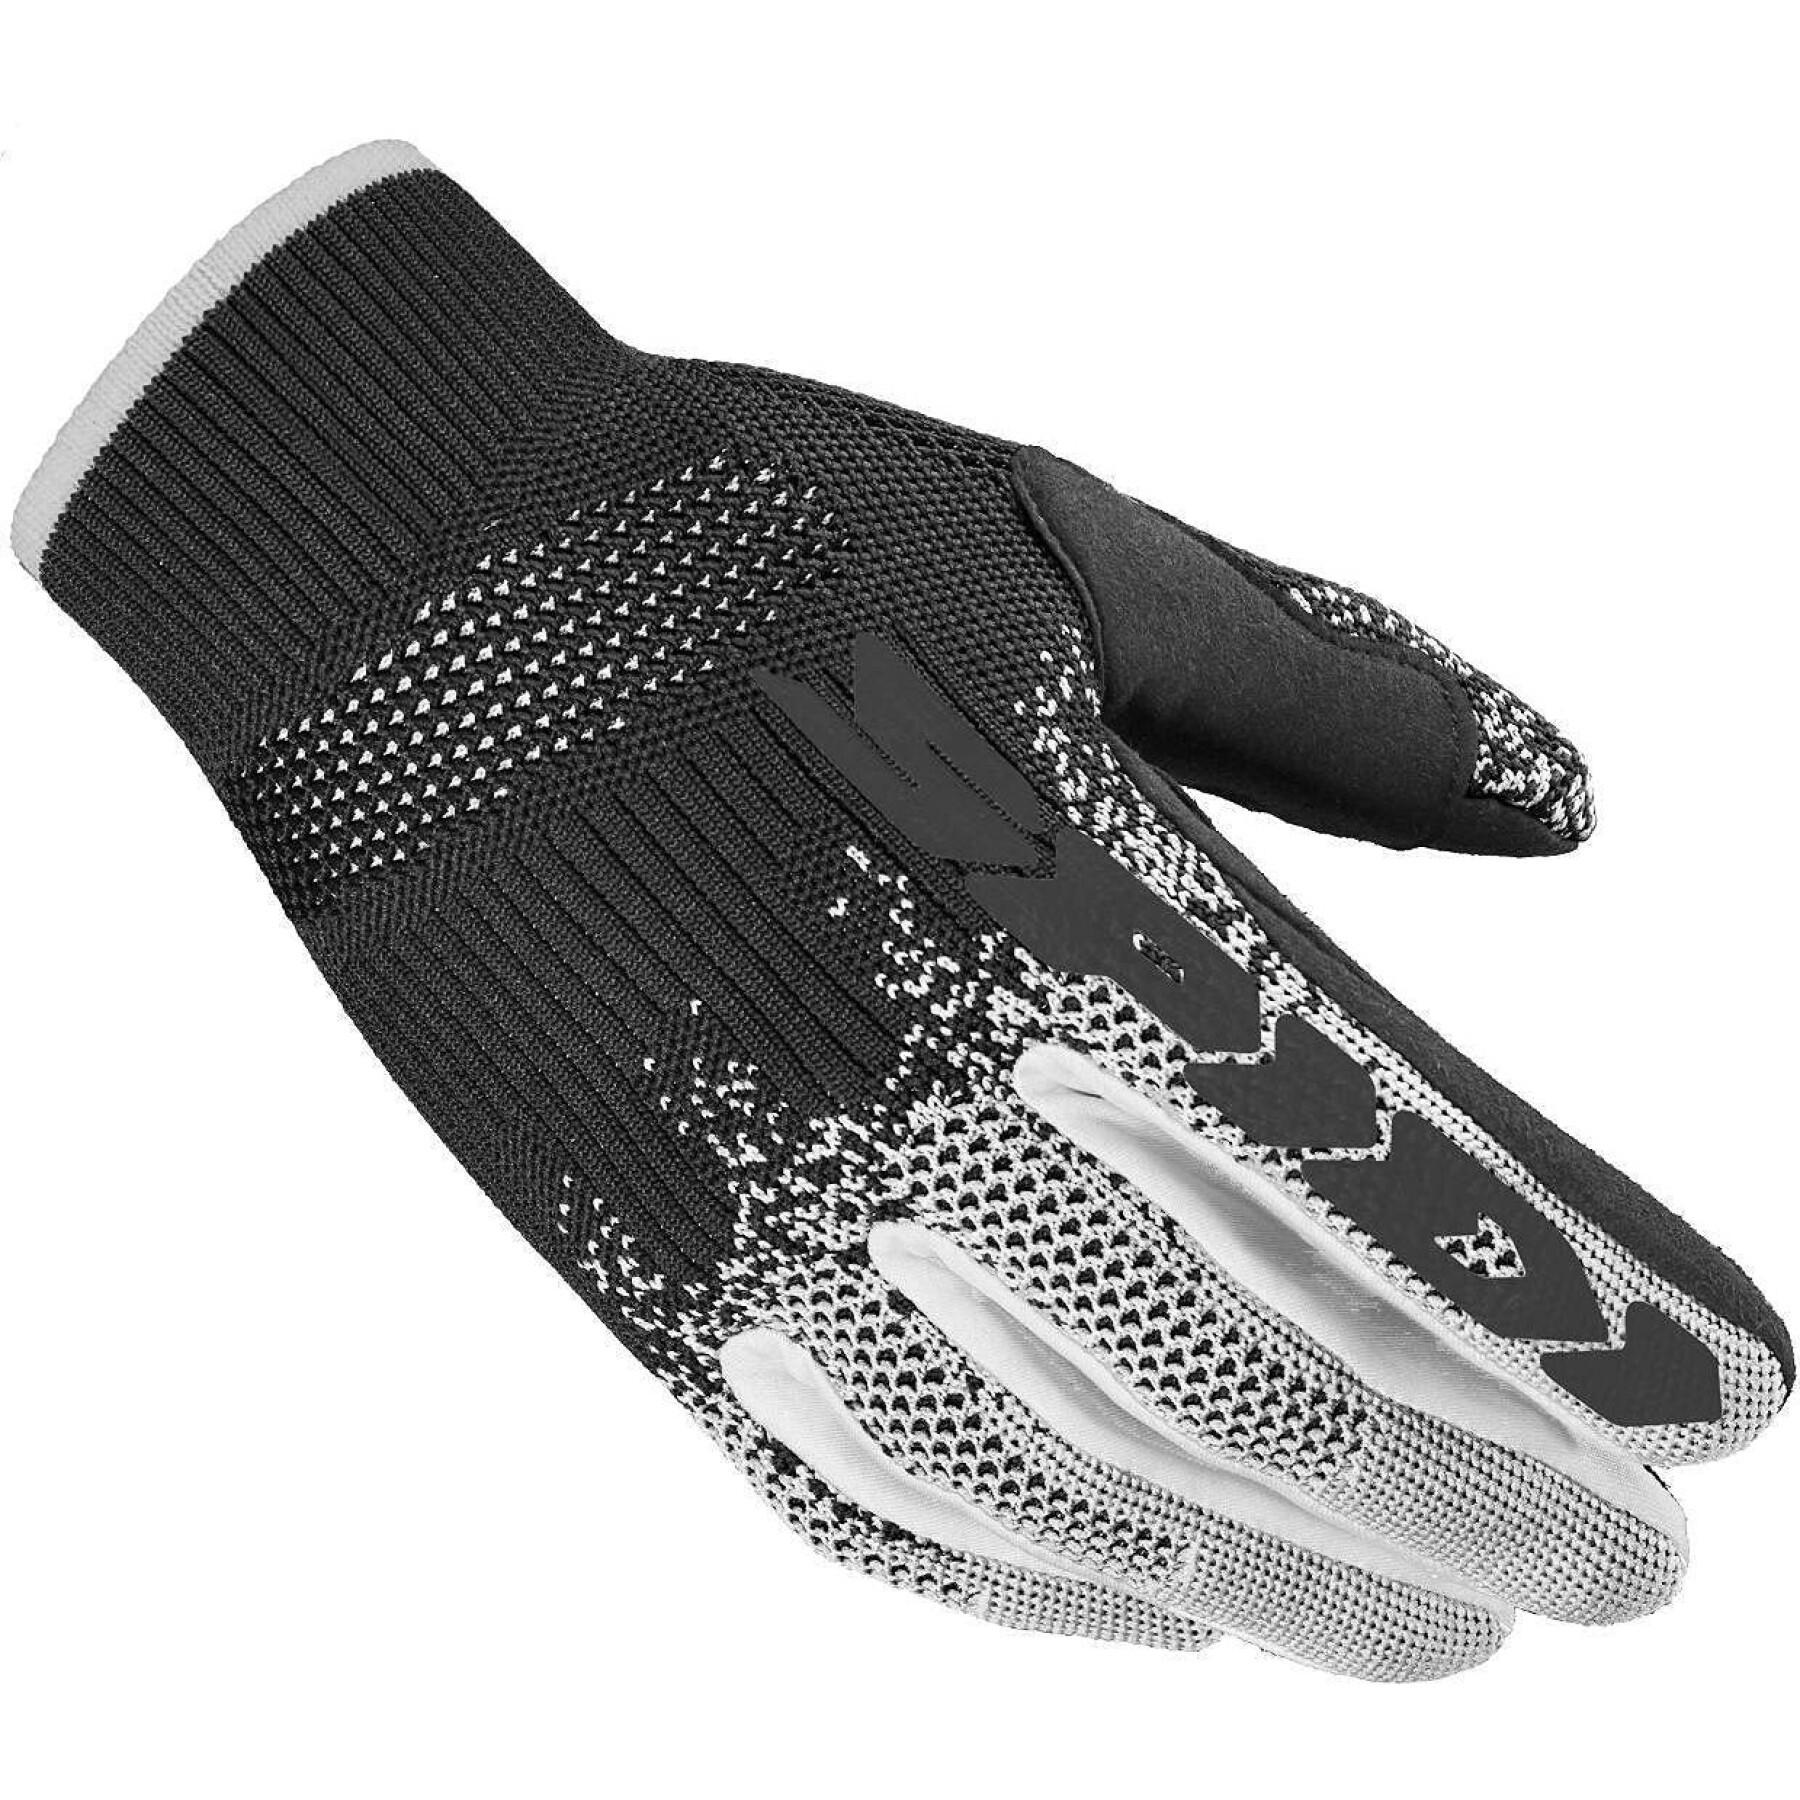 Summer motorcycle gloves Spidi x-knit k3